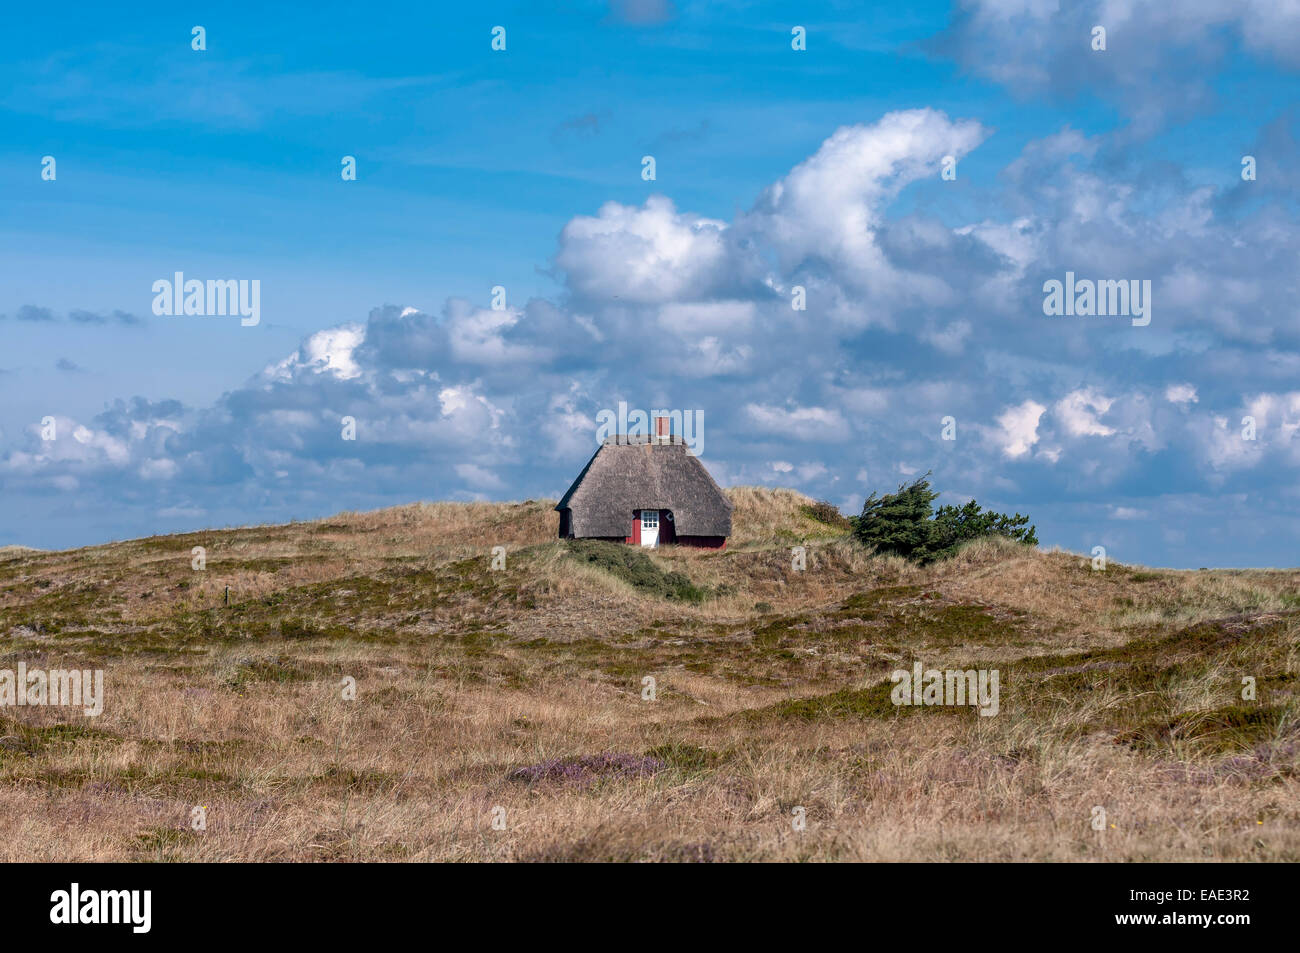 Thatched holiday cottage in dune landscape, Henne Strand, Jutland, Denmark Stock Photo